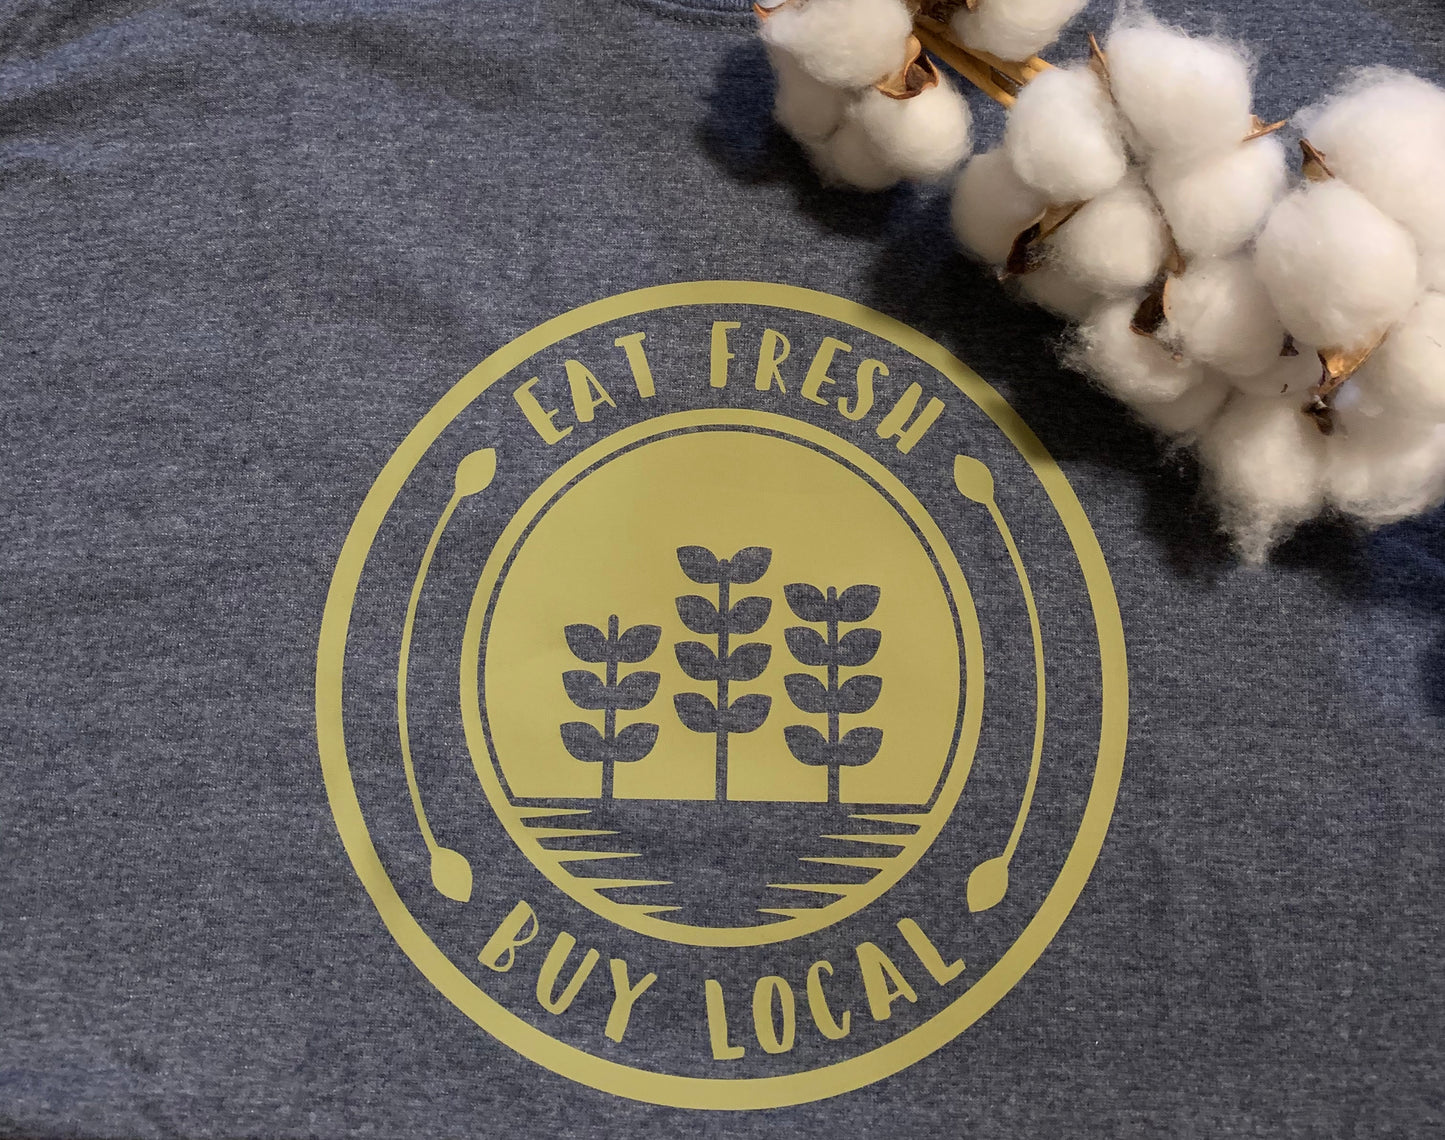 Eat Fresh, Buy Local